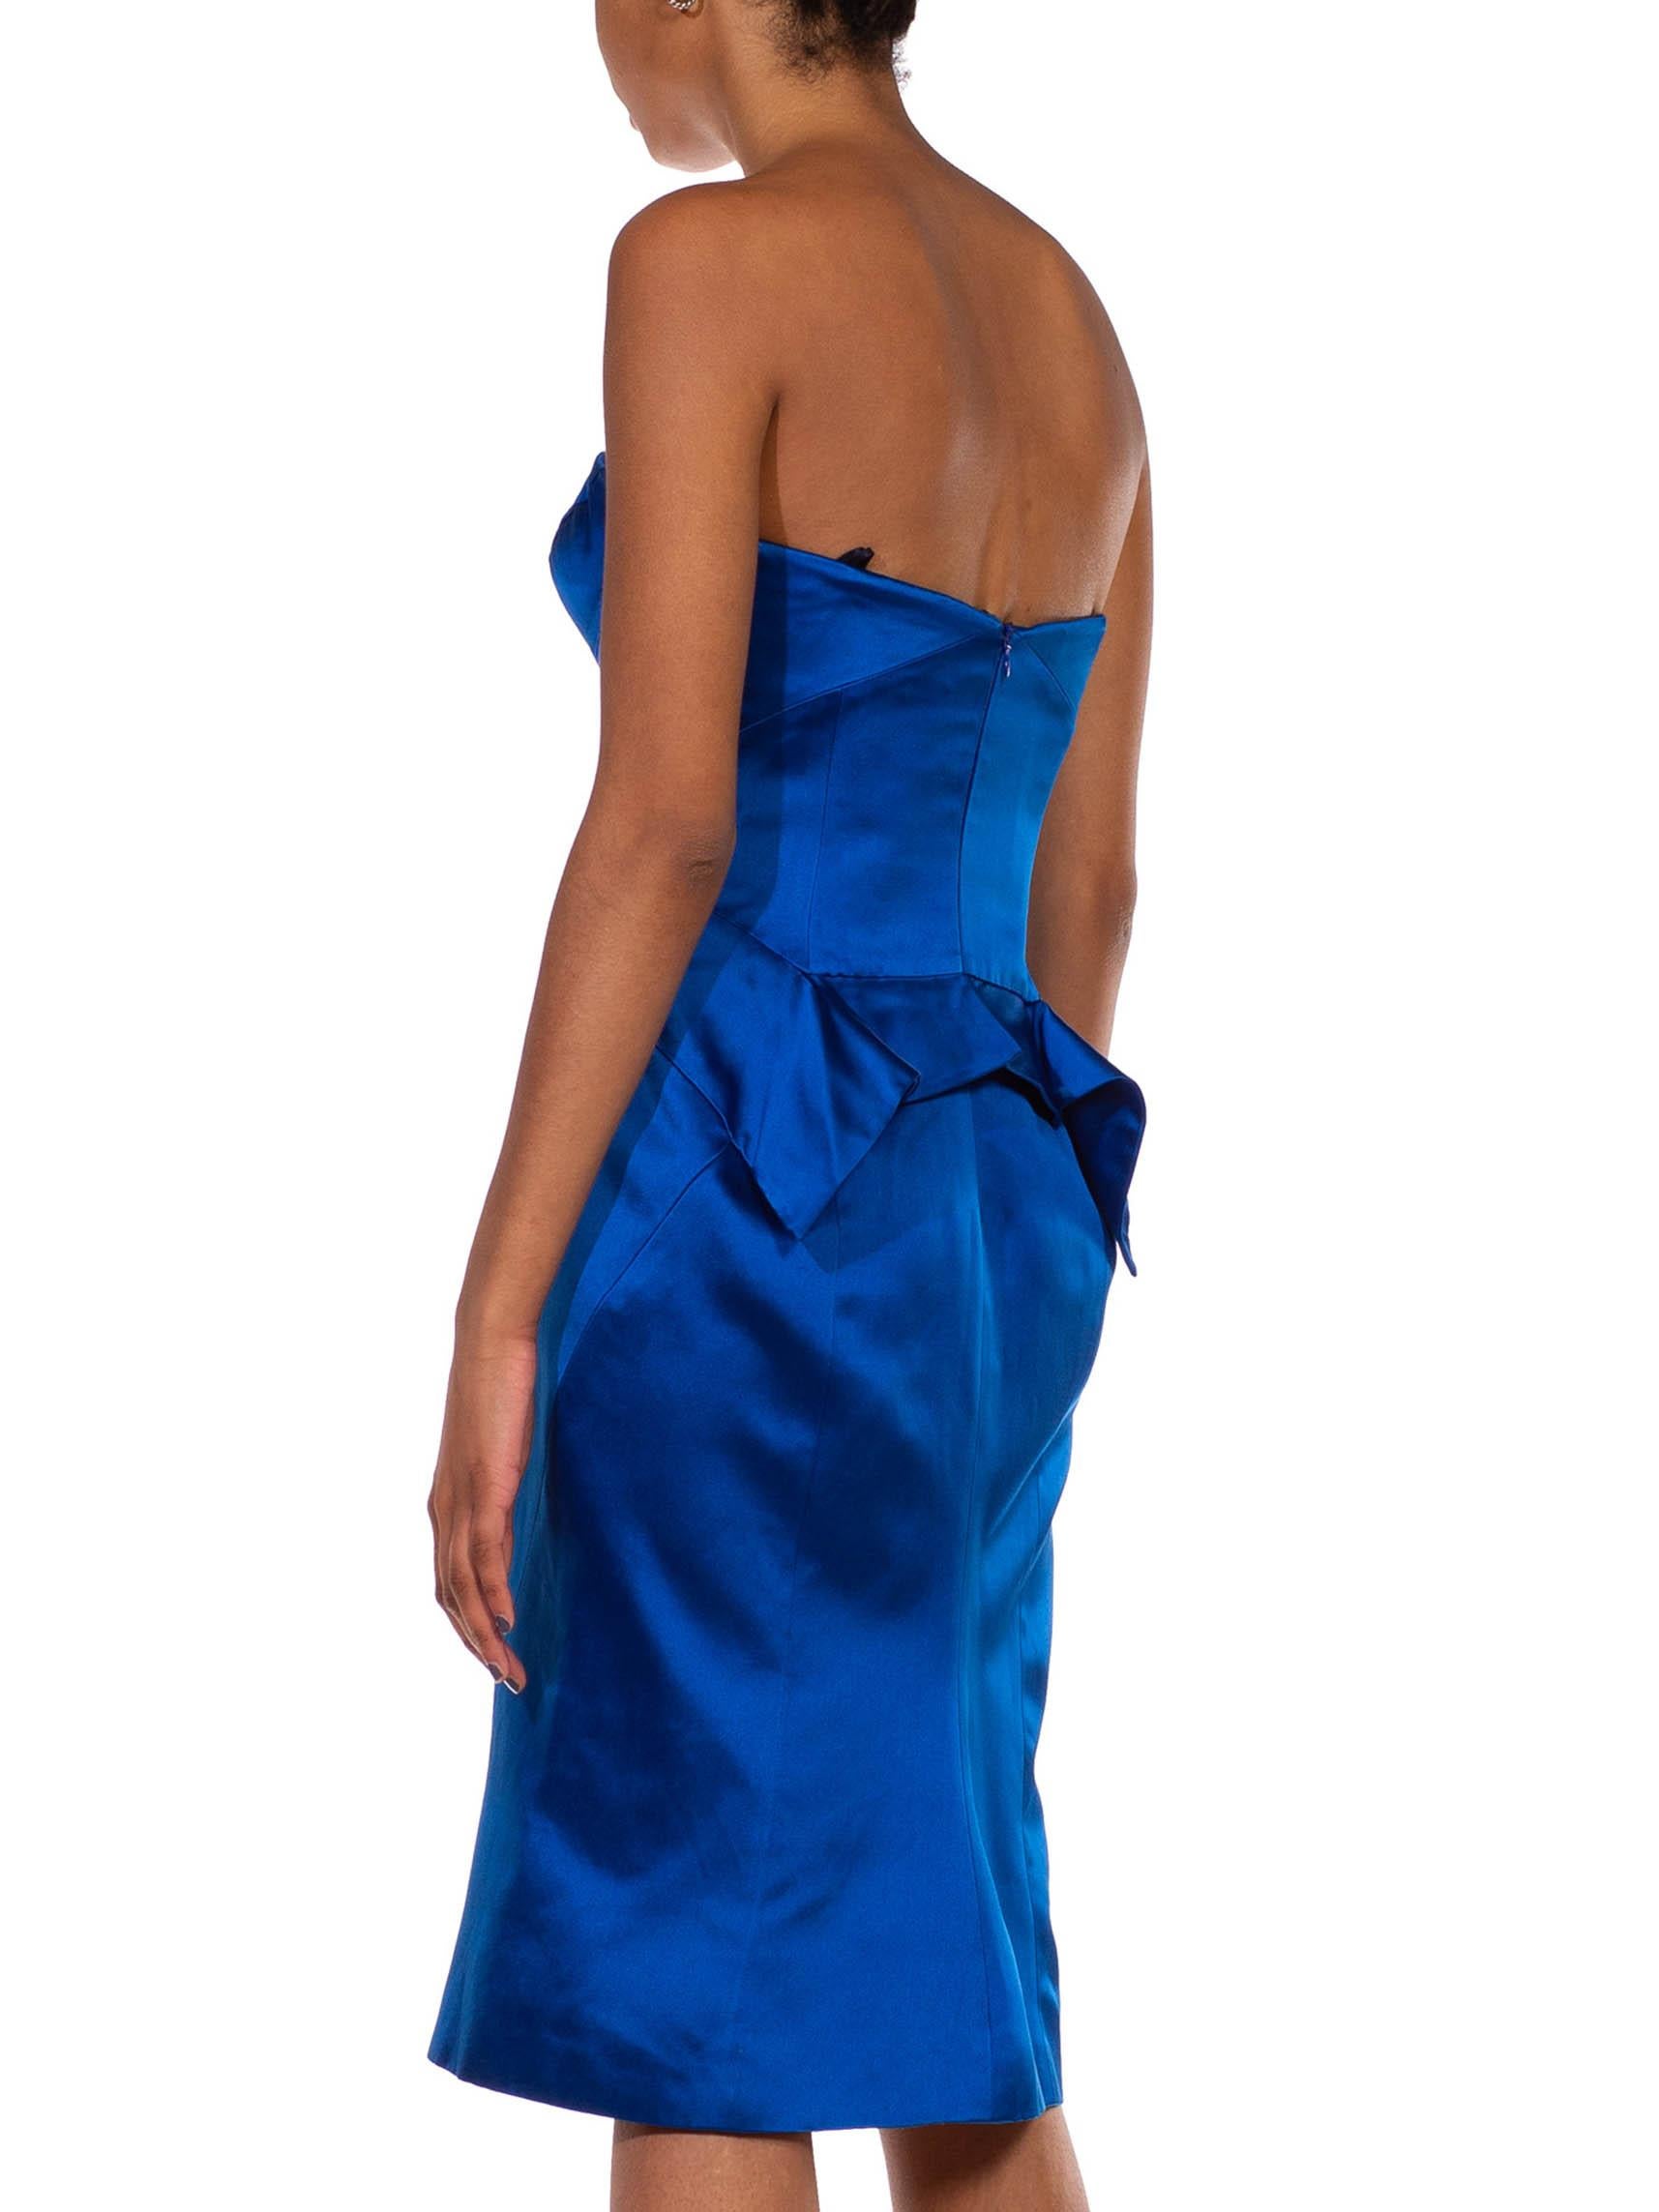 Women's 2000S ZAC POSEN Electric Blue  Silk Duchess Satin Strapless Cocktail Dress For Sale